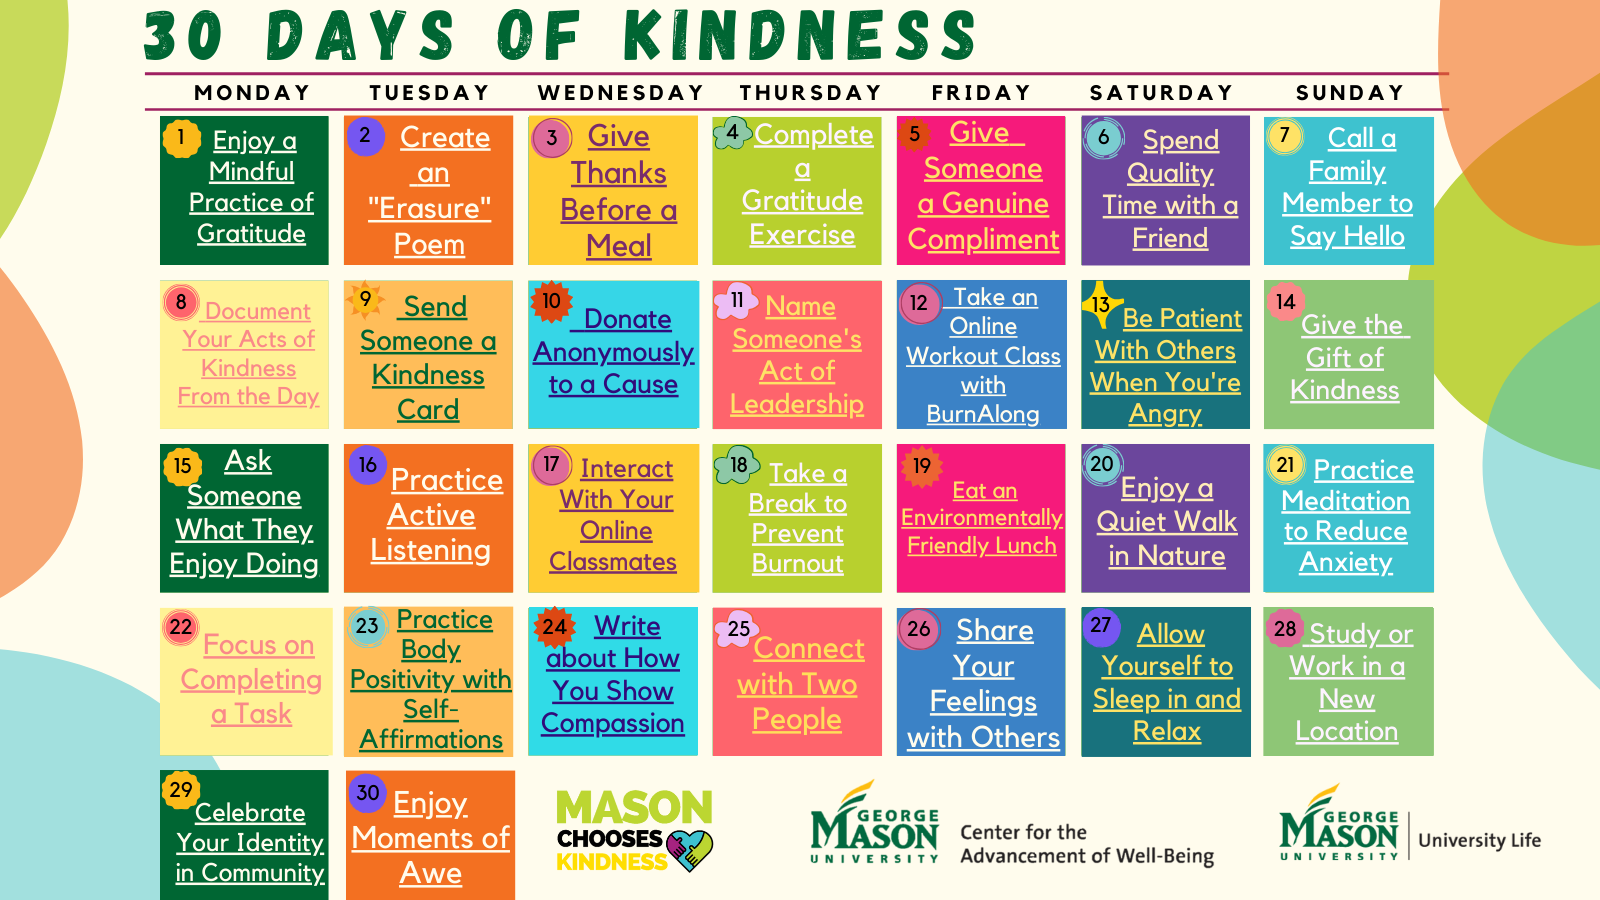 Mason Chooses Kindness